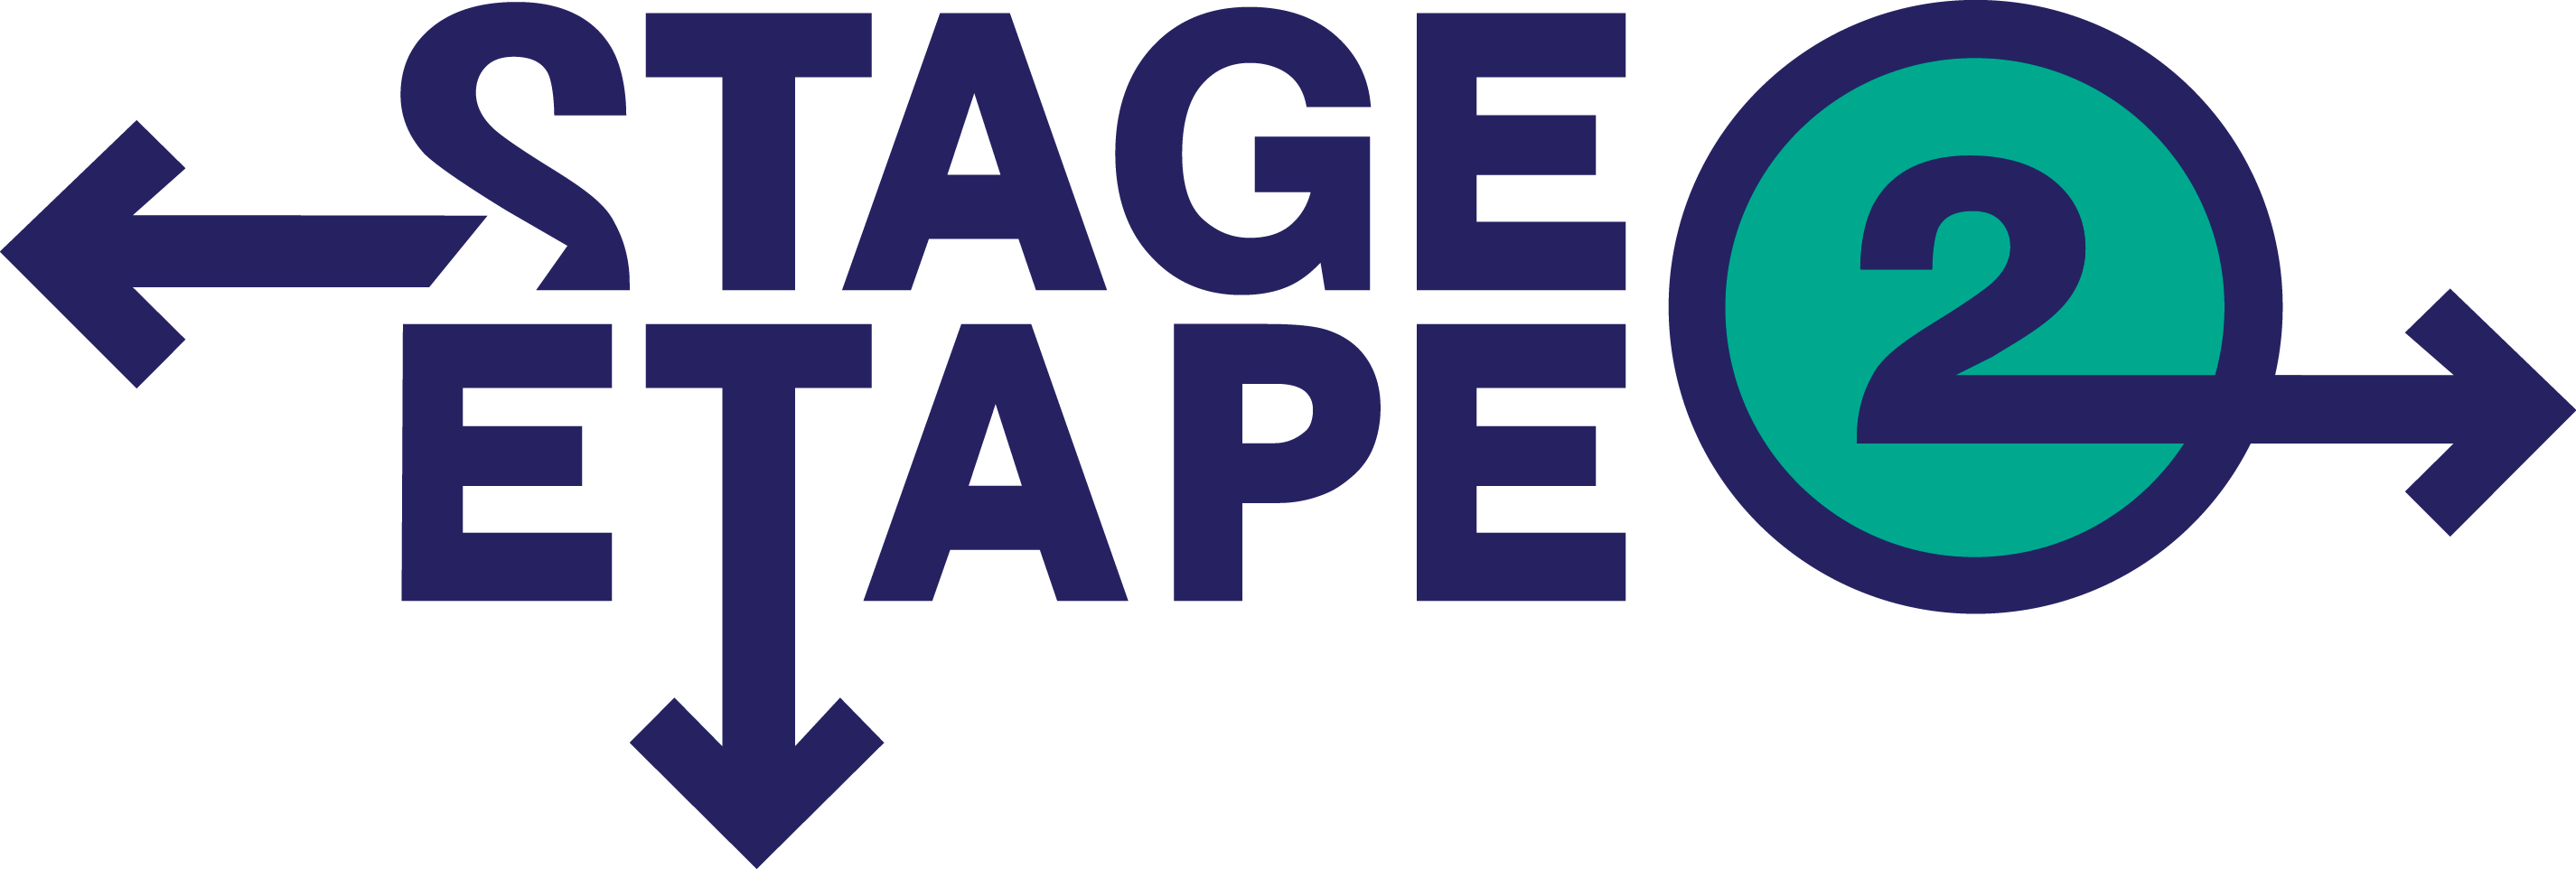 Stage 2 logo